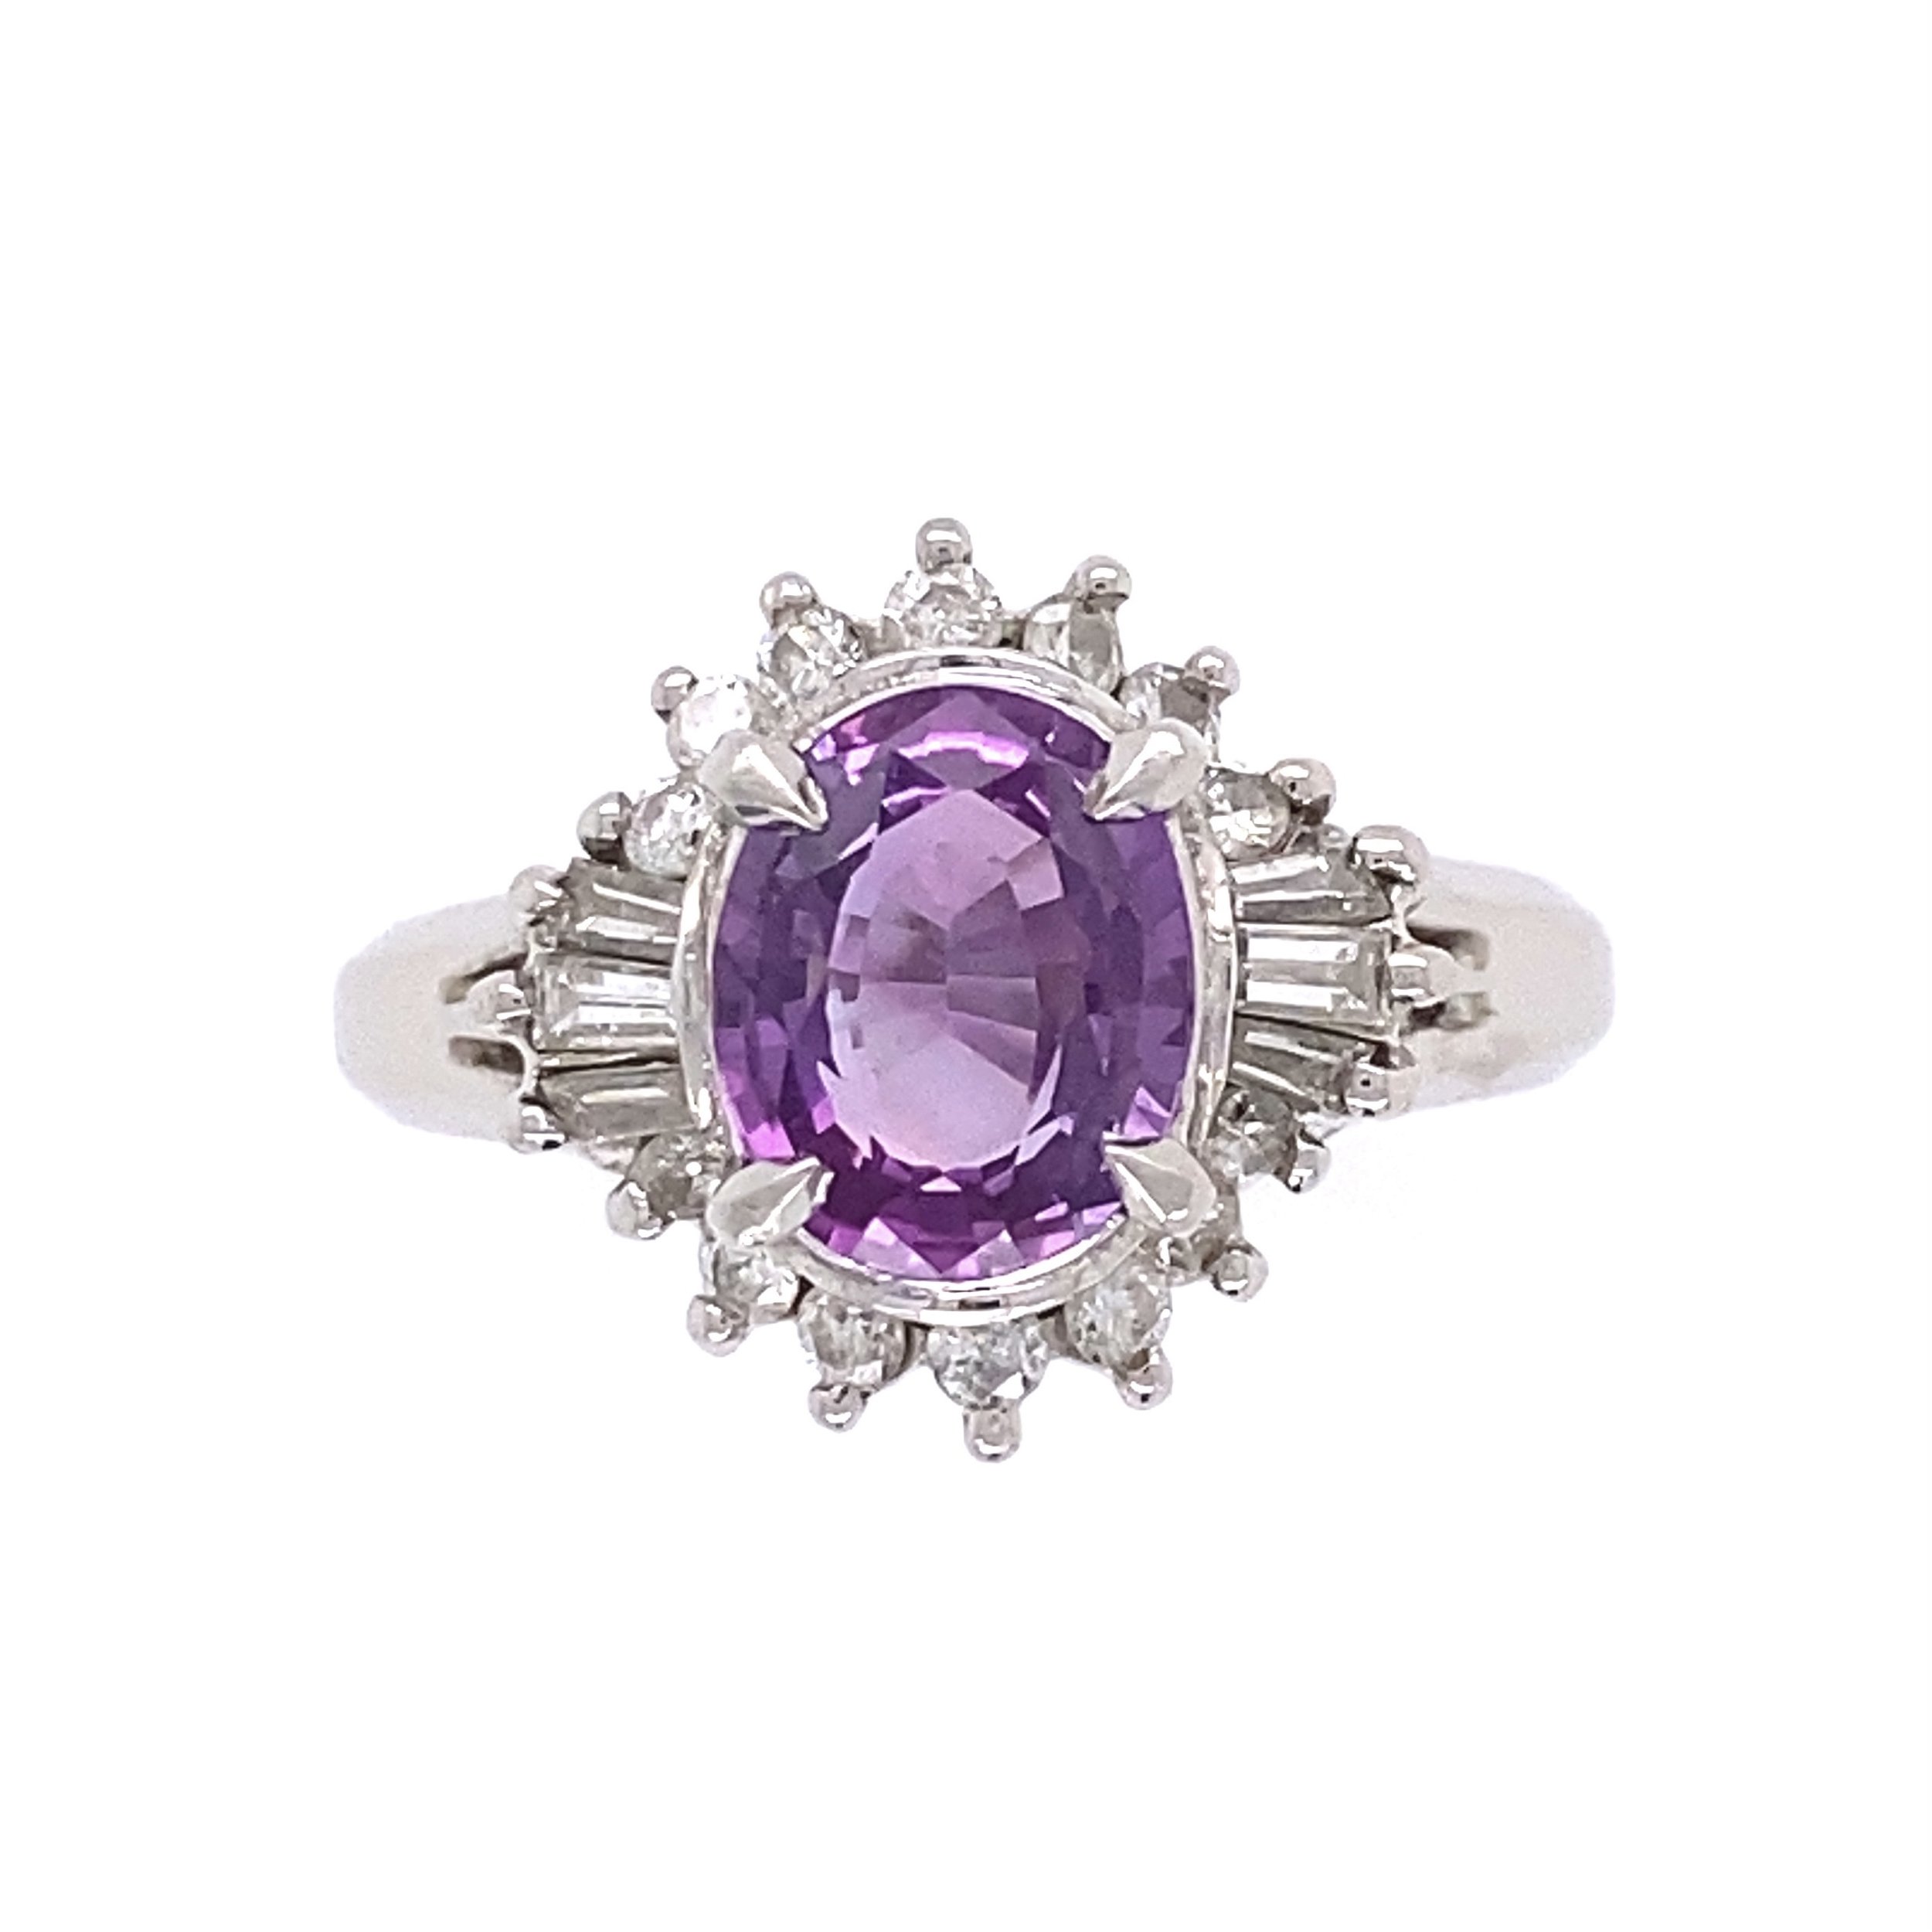 Platinum 1.52ct Oval Purple Sapphire & .37tcw Diamond Ring 5.8g, s4.5